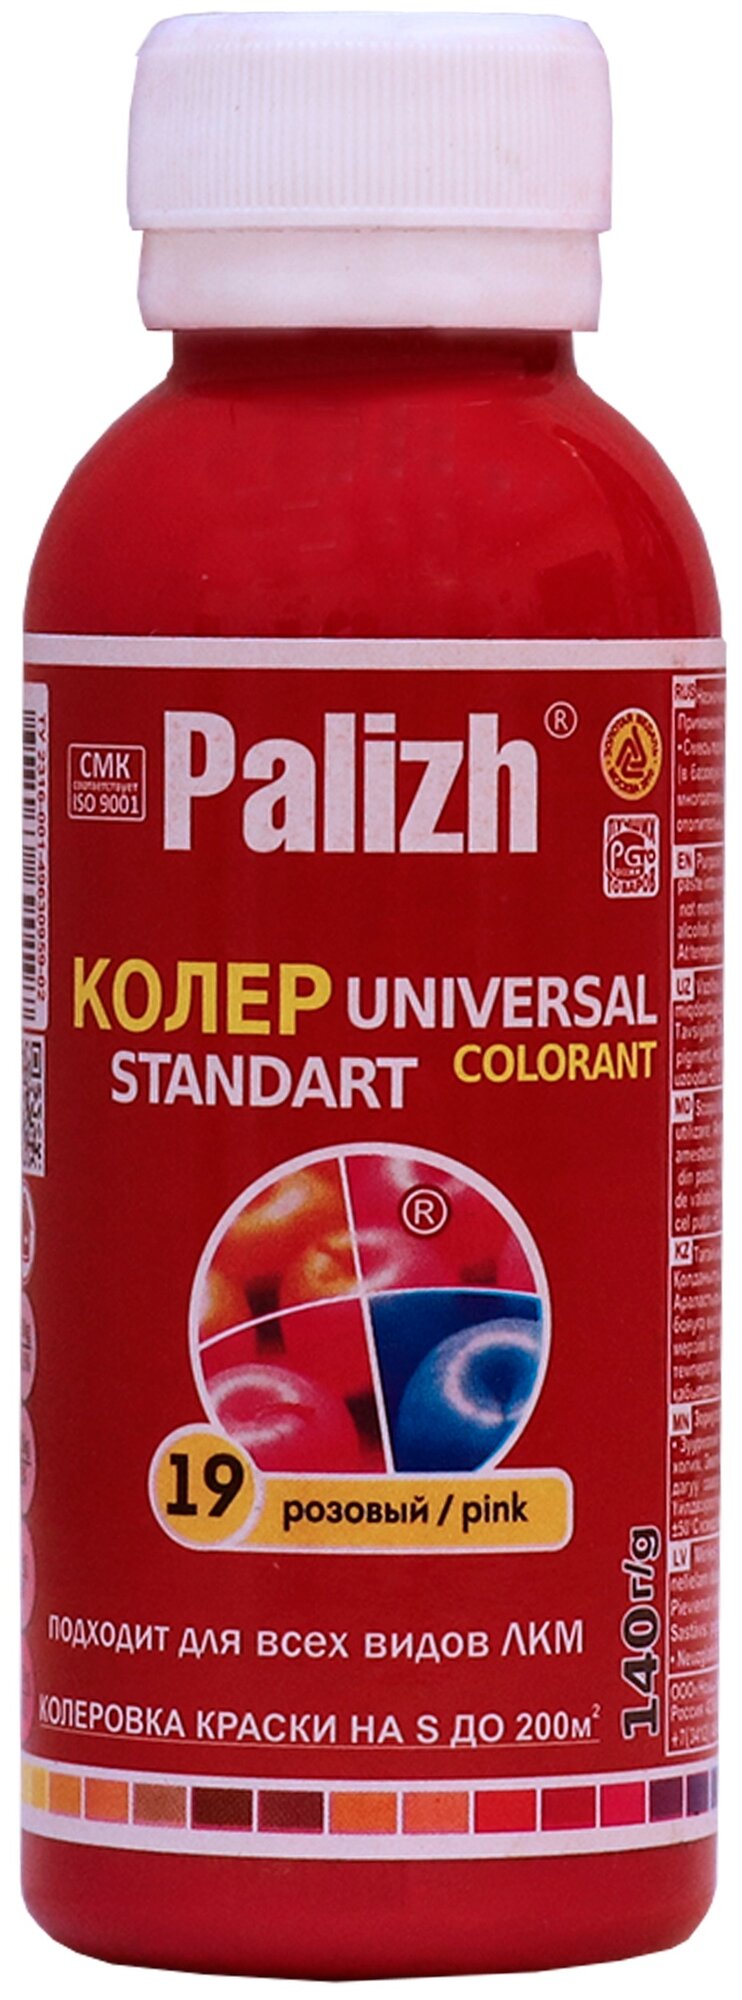 Колеровочная паста Palizh Universal Standart ST-19 розовый 0.1 л